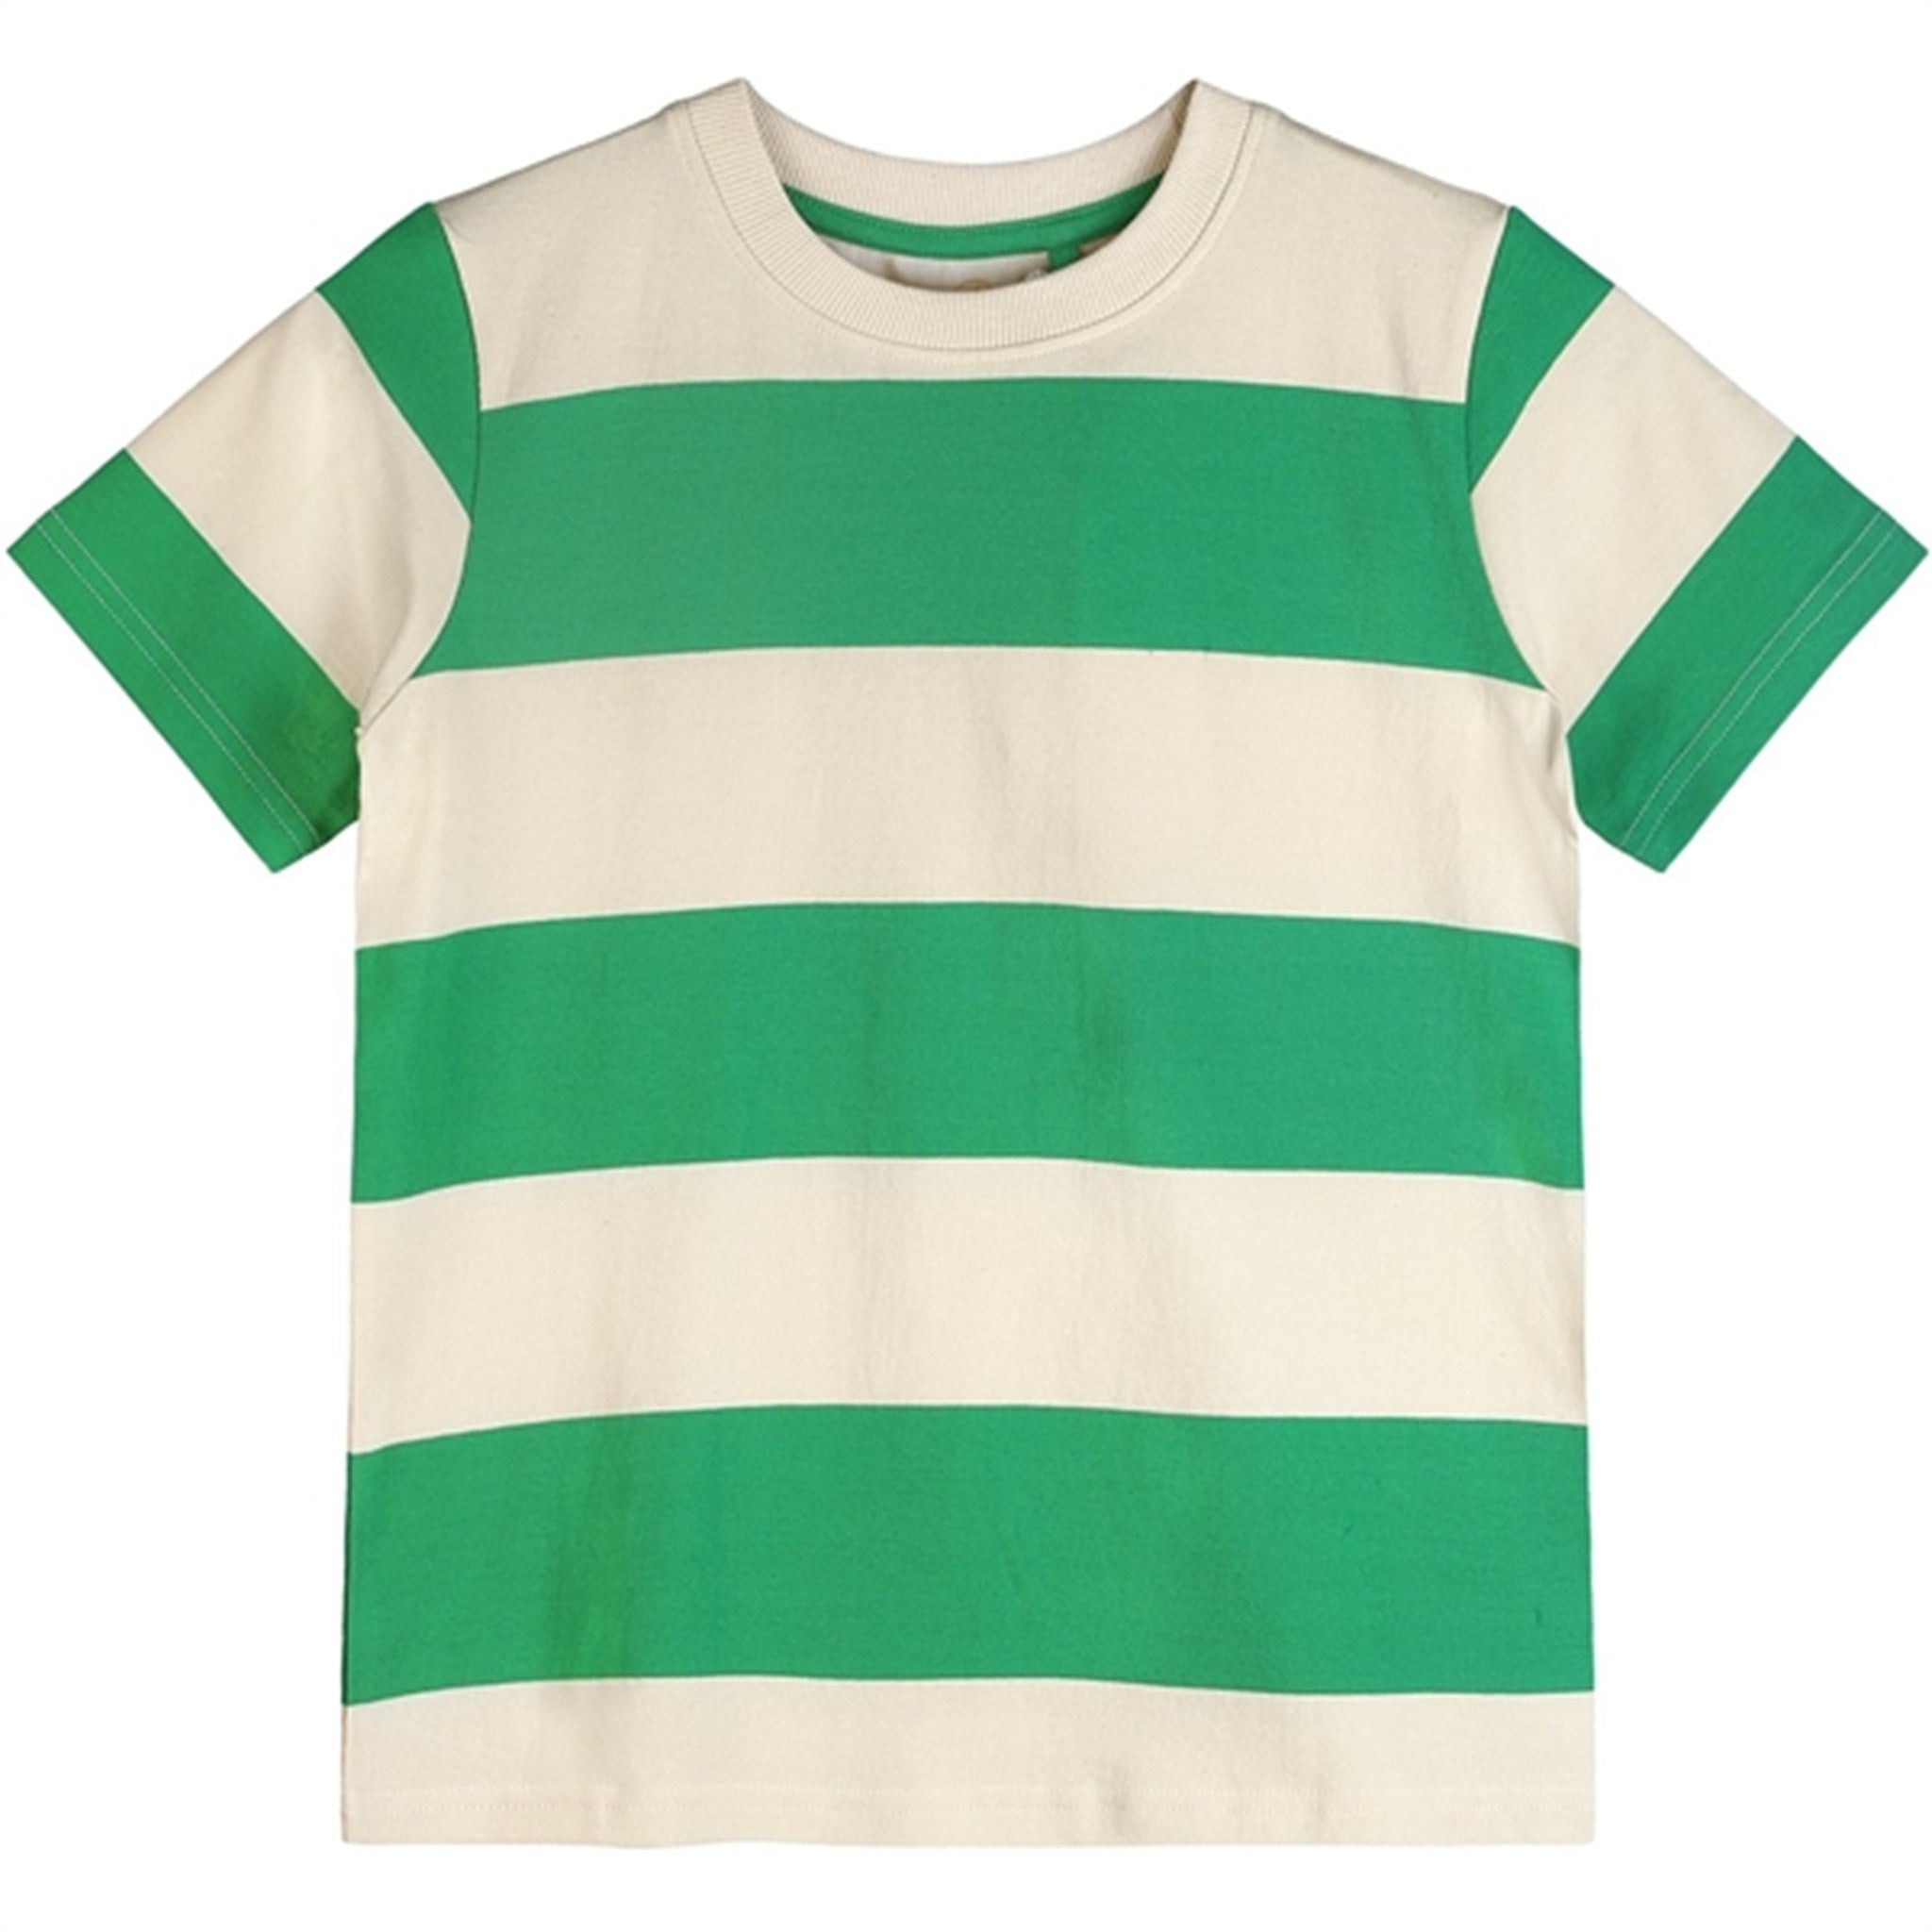 The New Bright Green Jae T-shirt